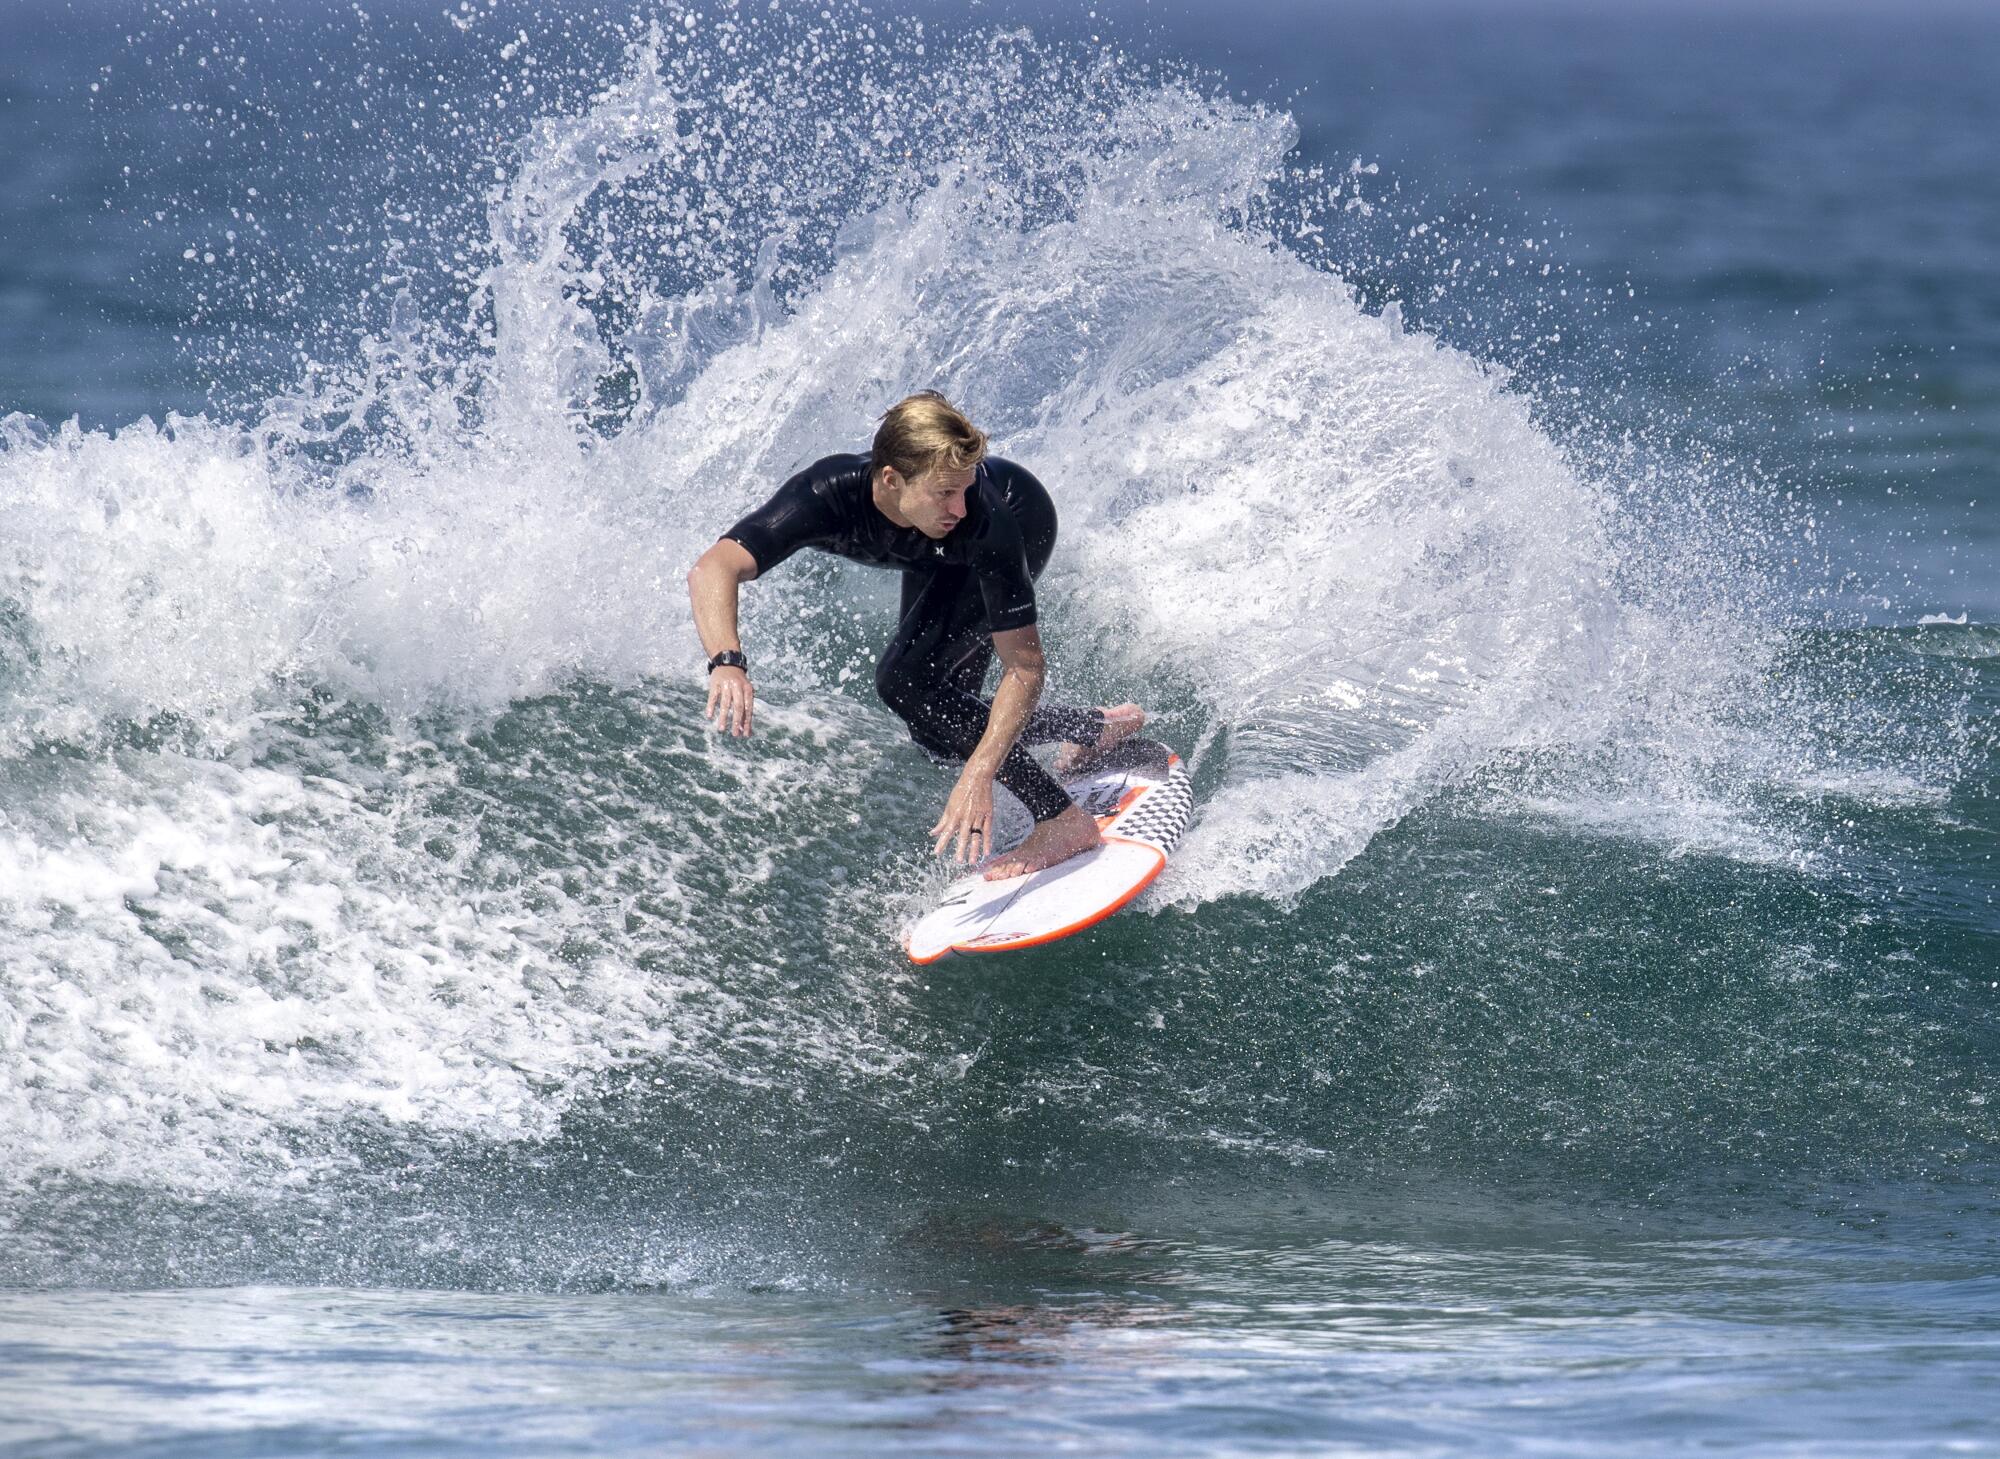 A surfer makes a slashing turn on a wave